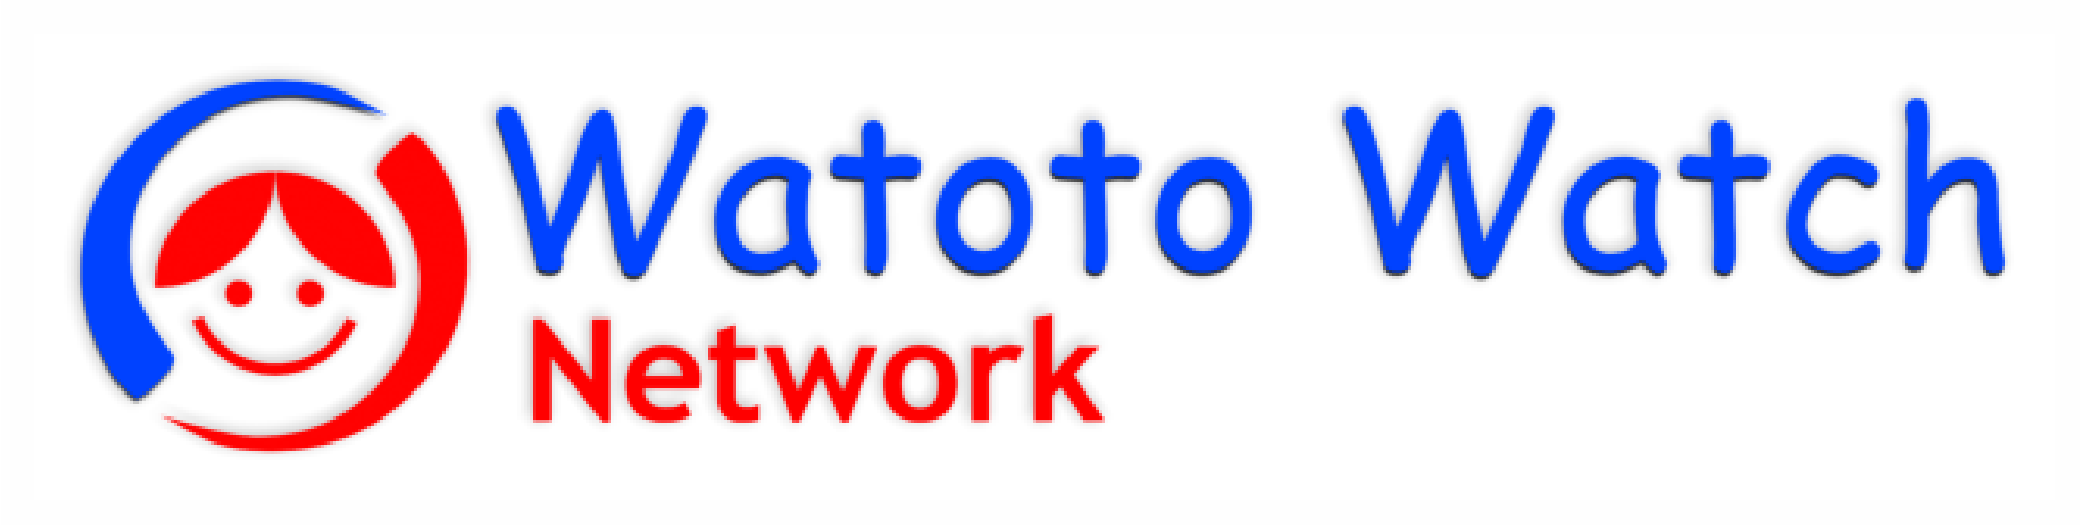 Watoto Watch Network